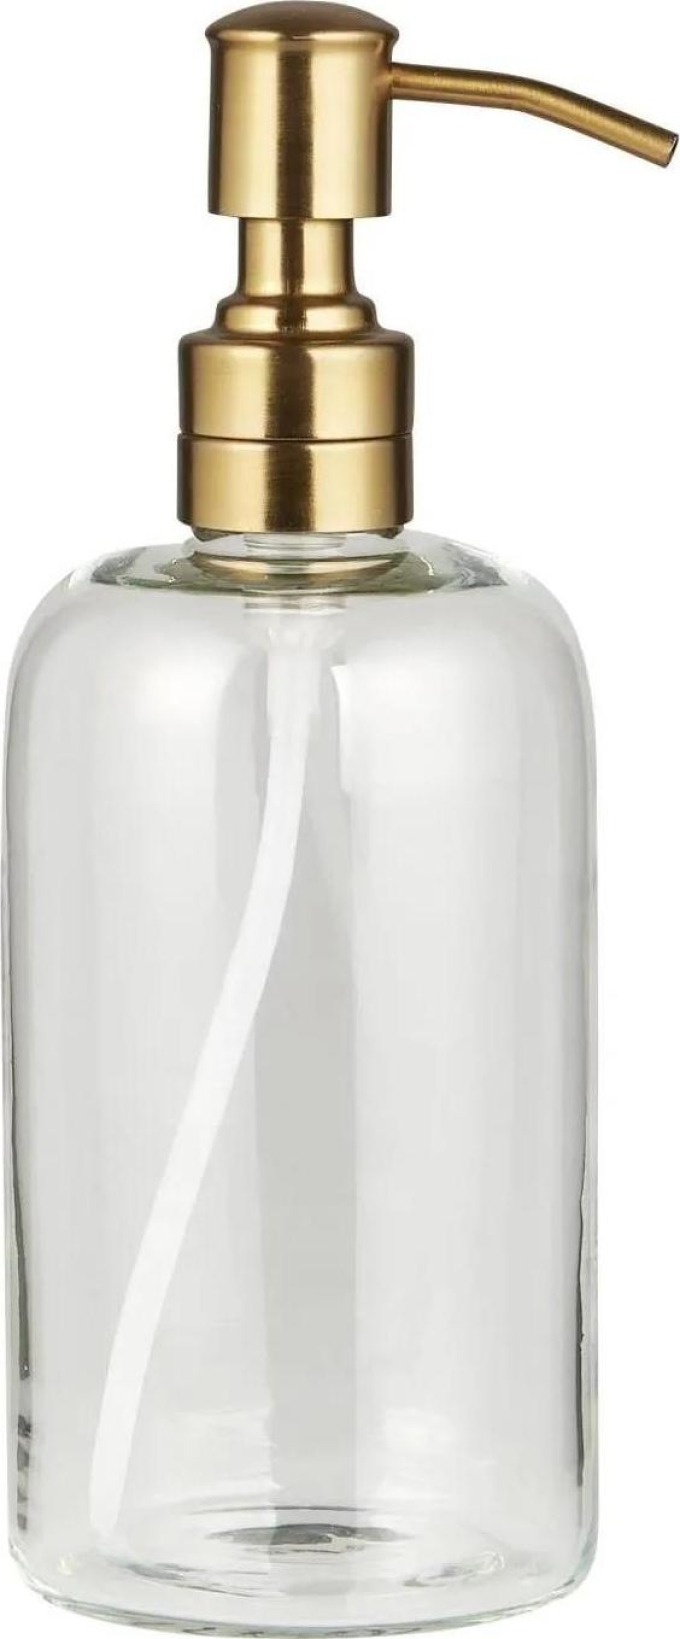 IB LAURSEN Skleněný dávkovač na mýdlo Brass Small, čirá barva, sklo